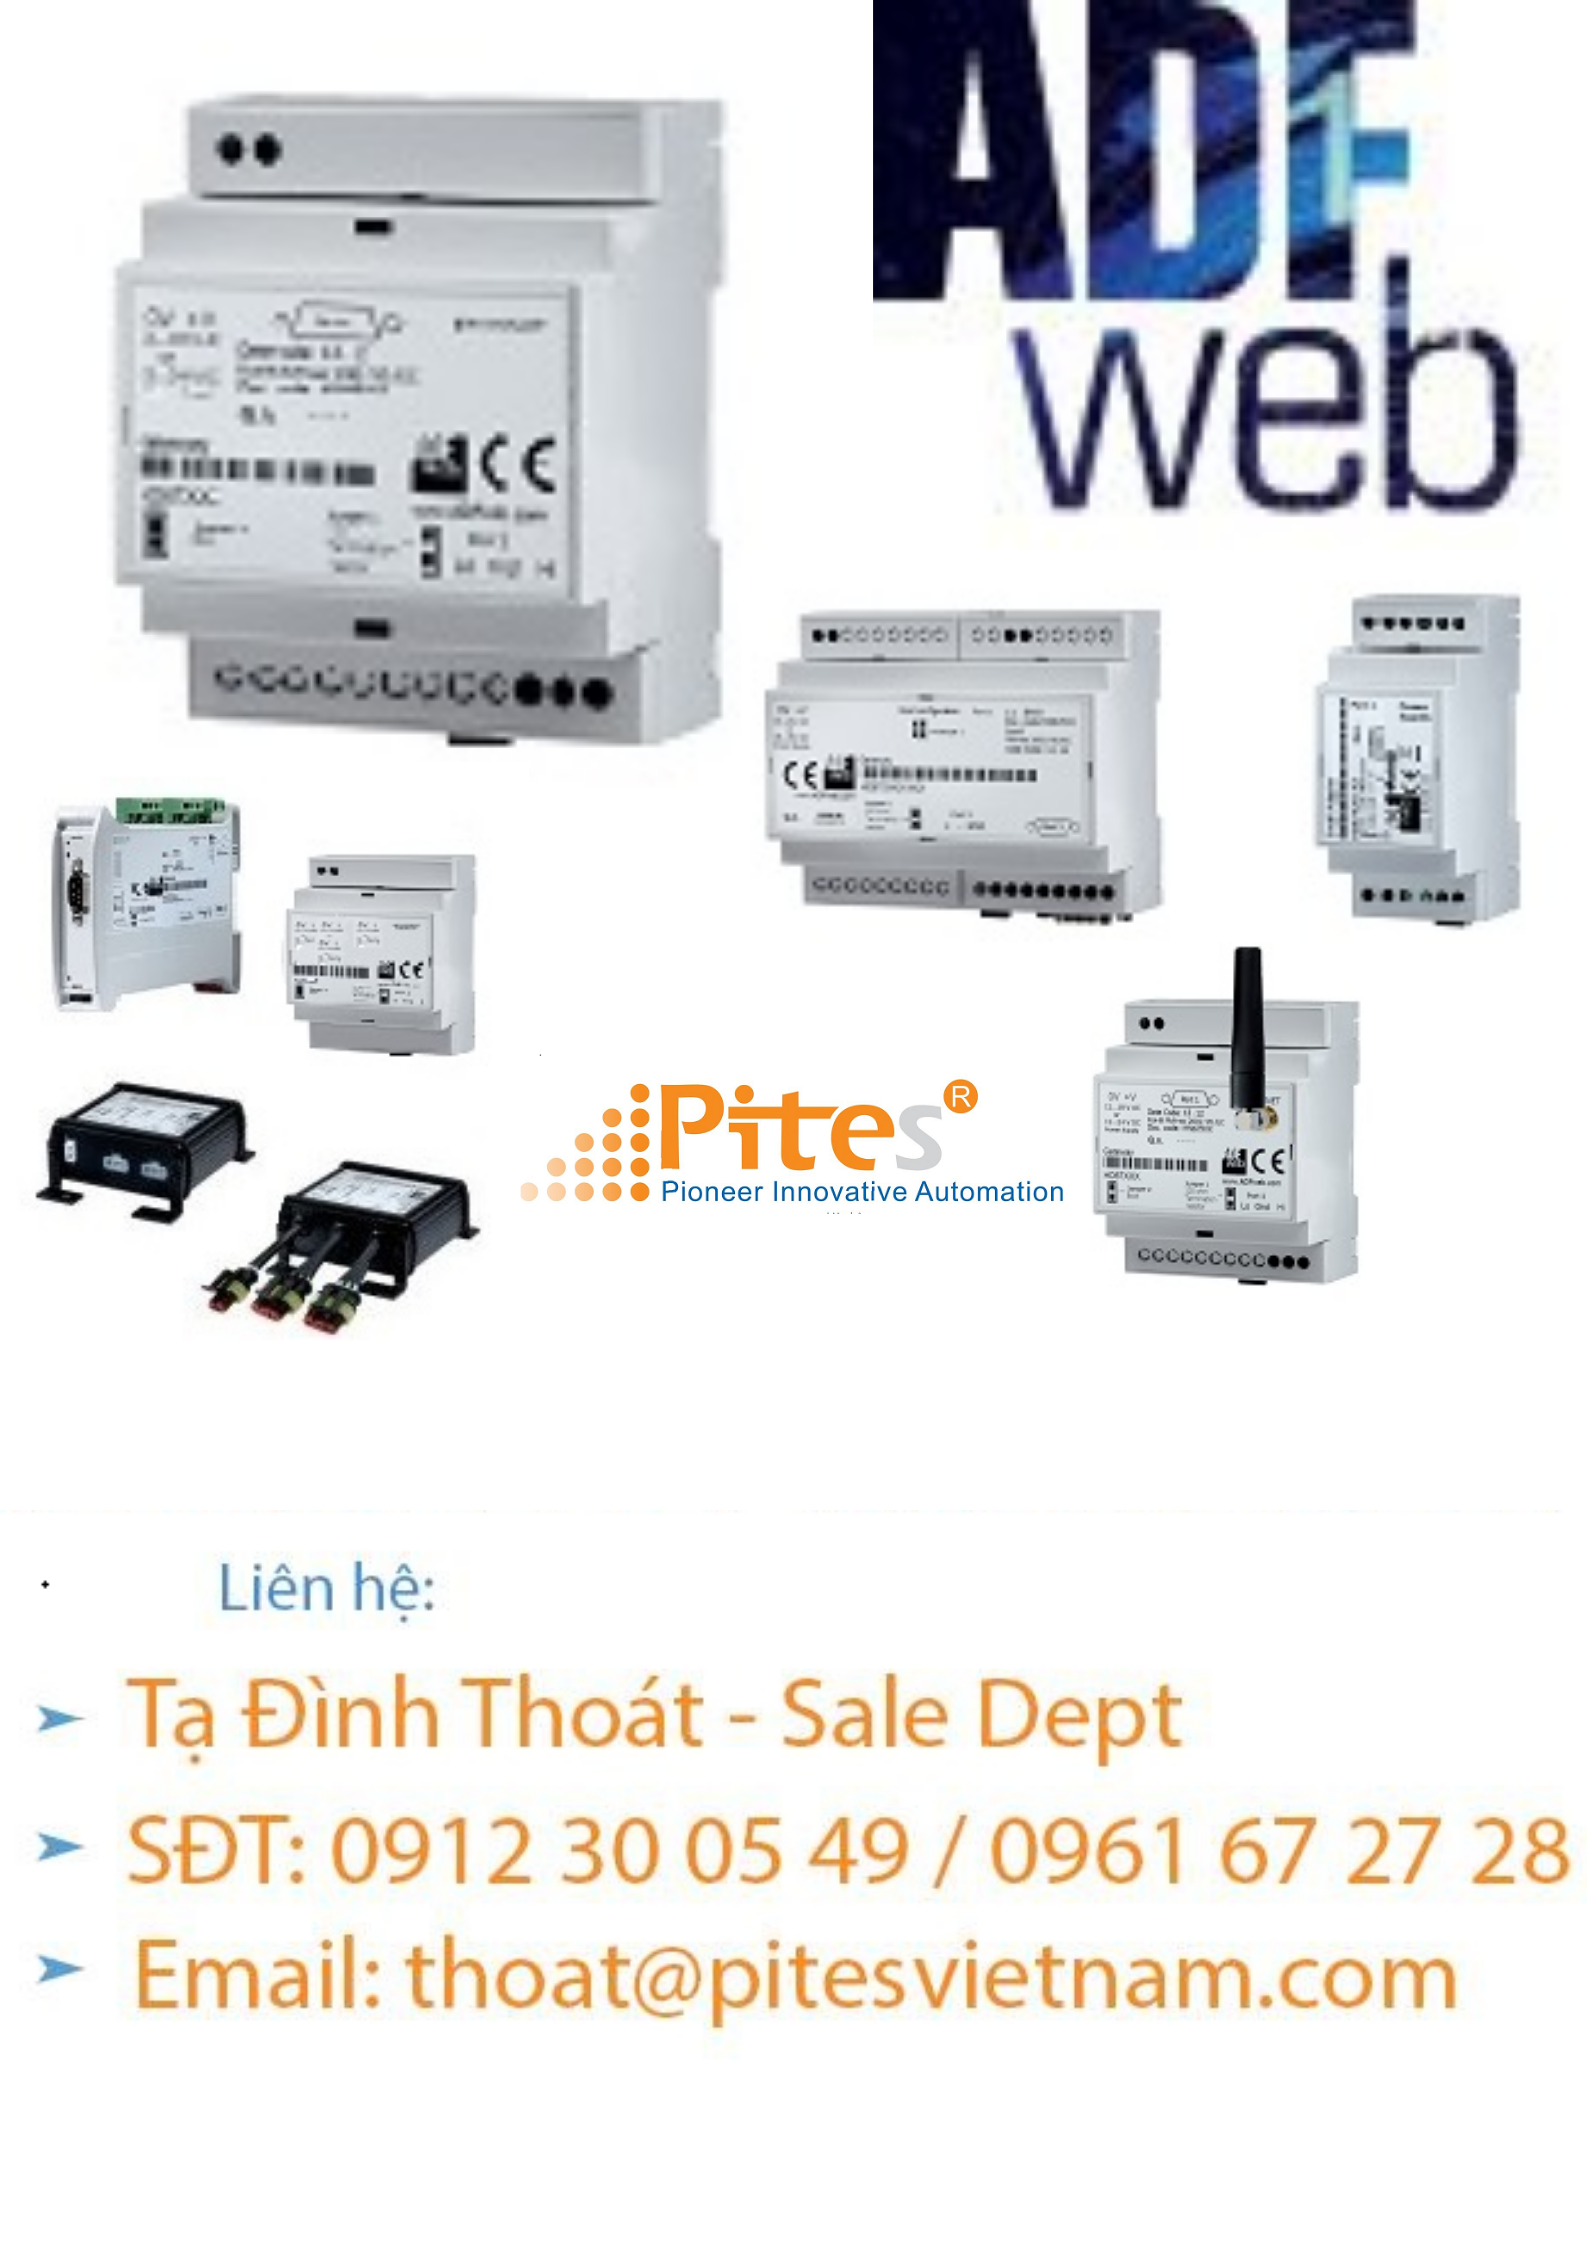 adf-web-vietnam-dai-ly-adfweb-viet-nam-hd67402-repeater-isolator-extender-canopen-triple-4kv-isolation.png